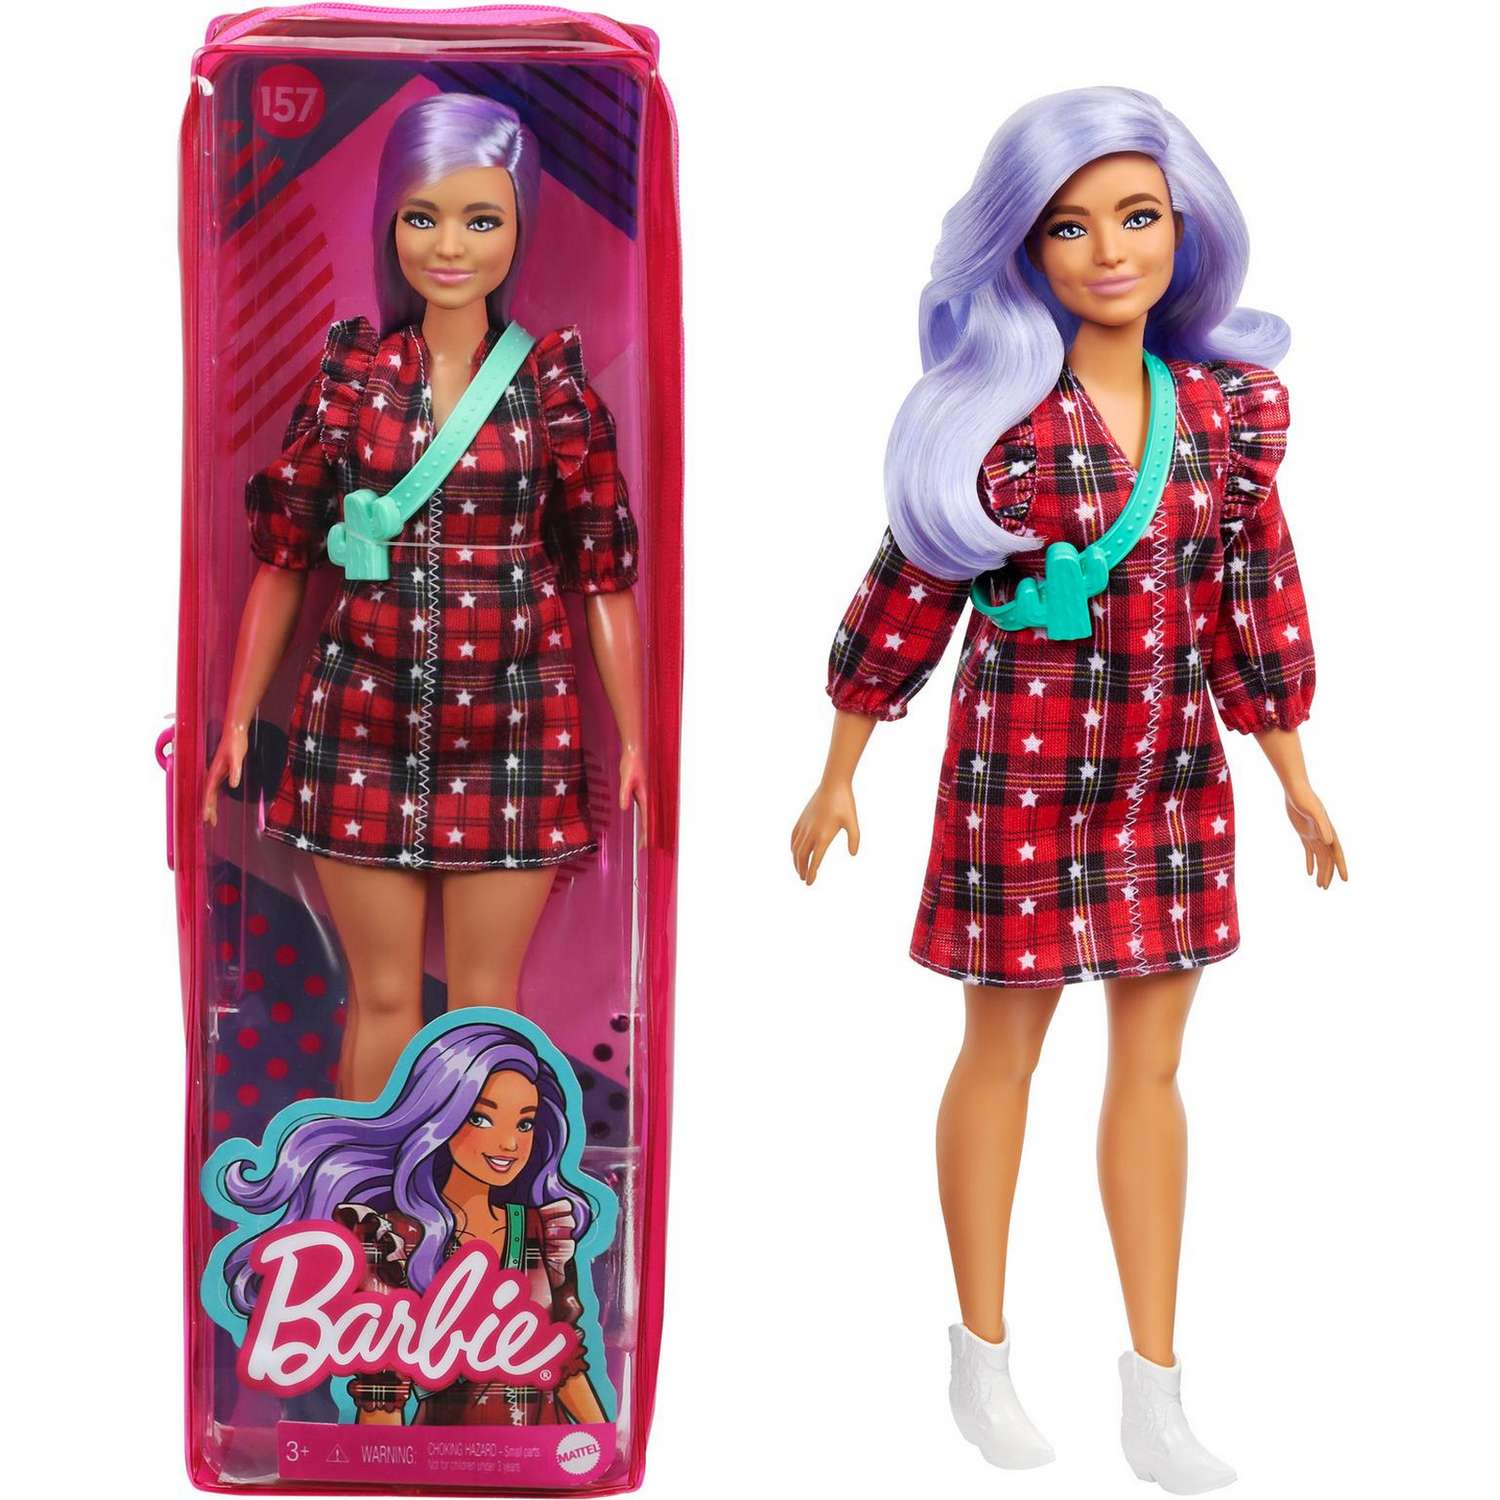 Кукла Barbie Игра с модой 157 GRB49 FBR37 - фото 9